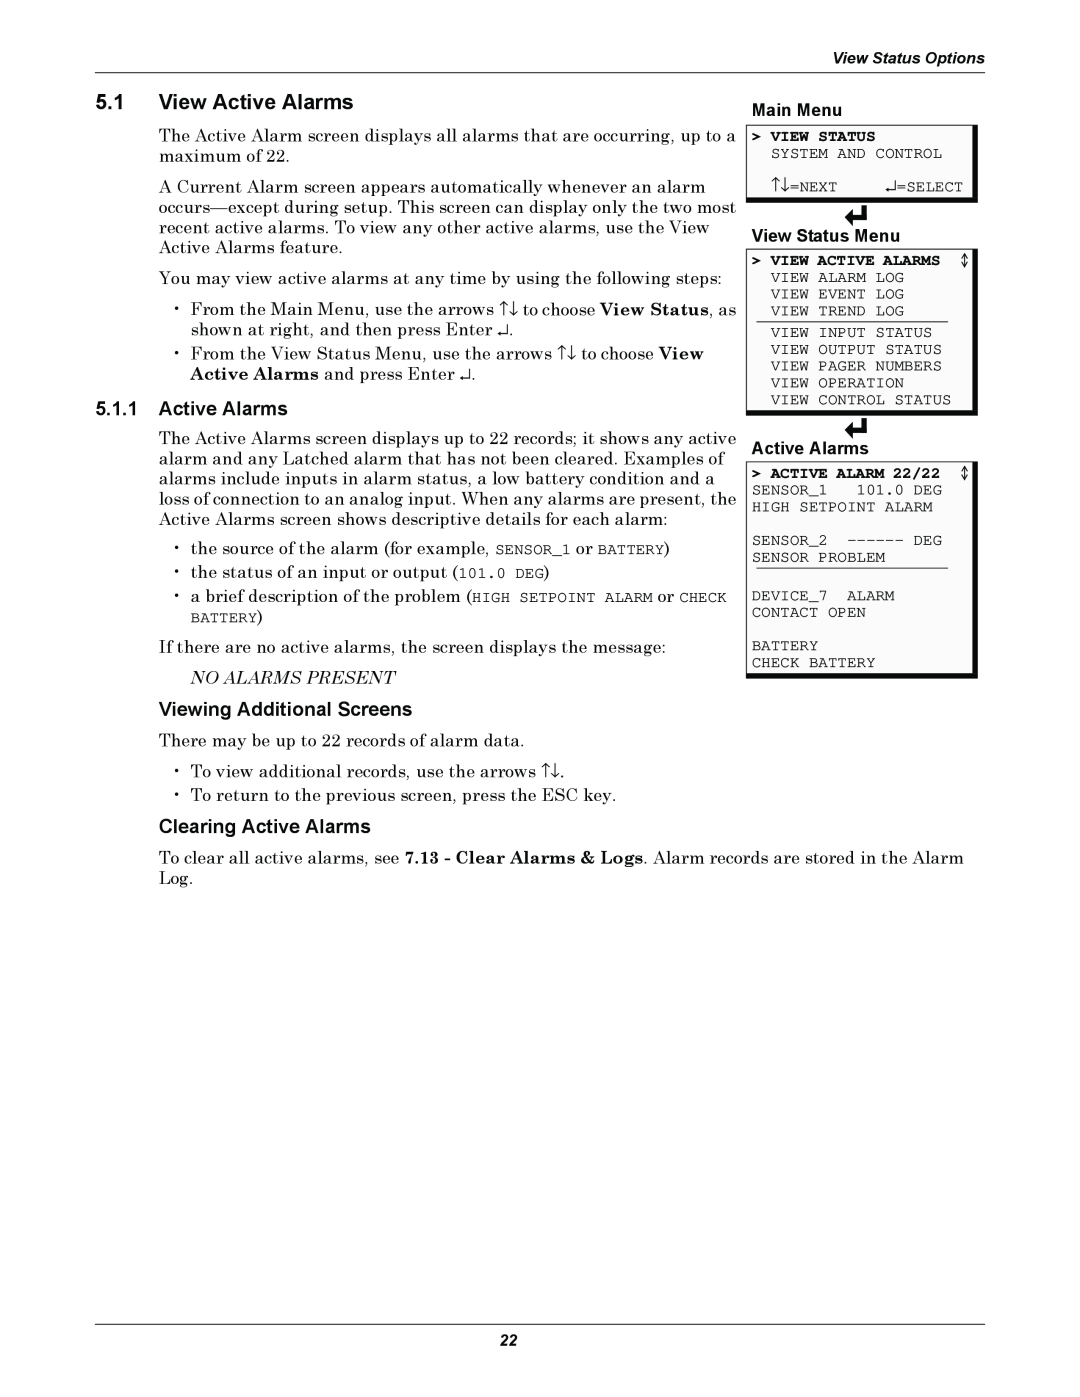 Emerson AC8 user manual 5.1.1Active Alarms, Viewing Additional Screens, Clearing Active Alarms, Main Menu, View Status Menu 